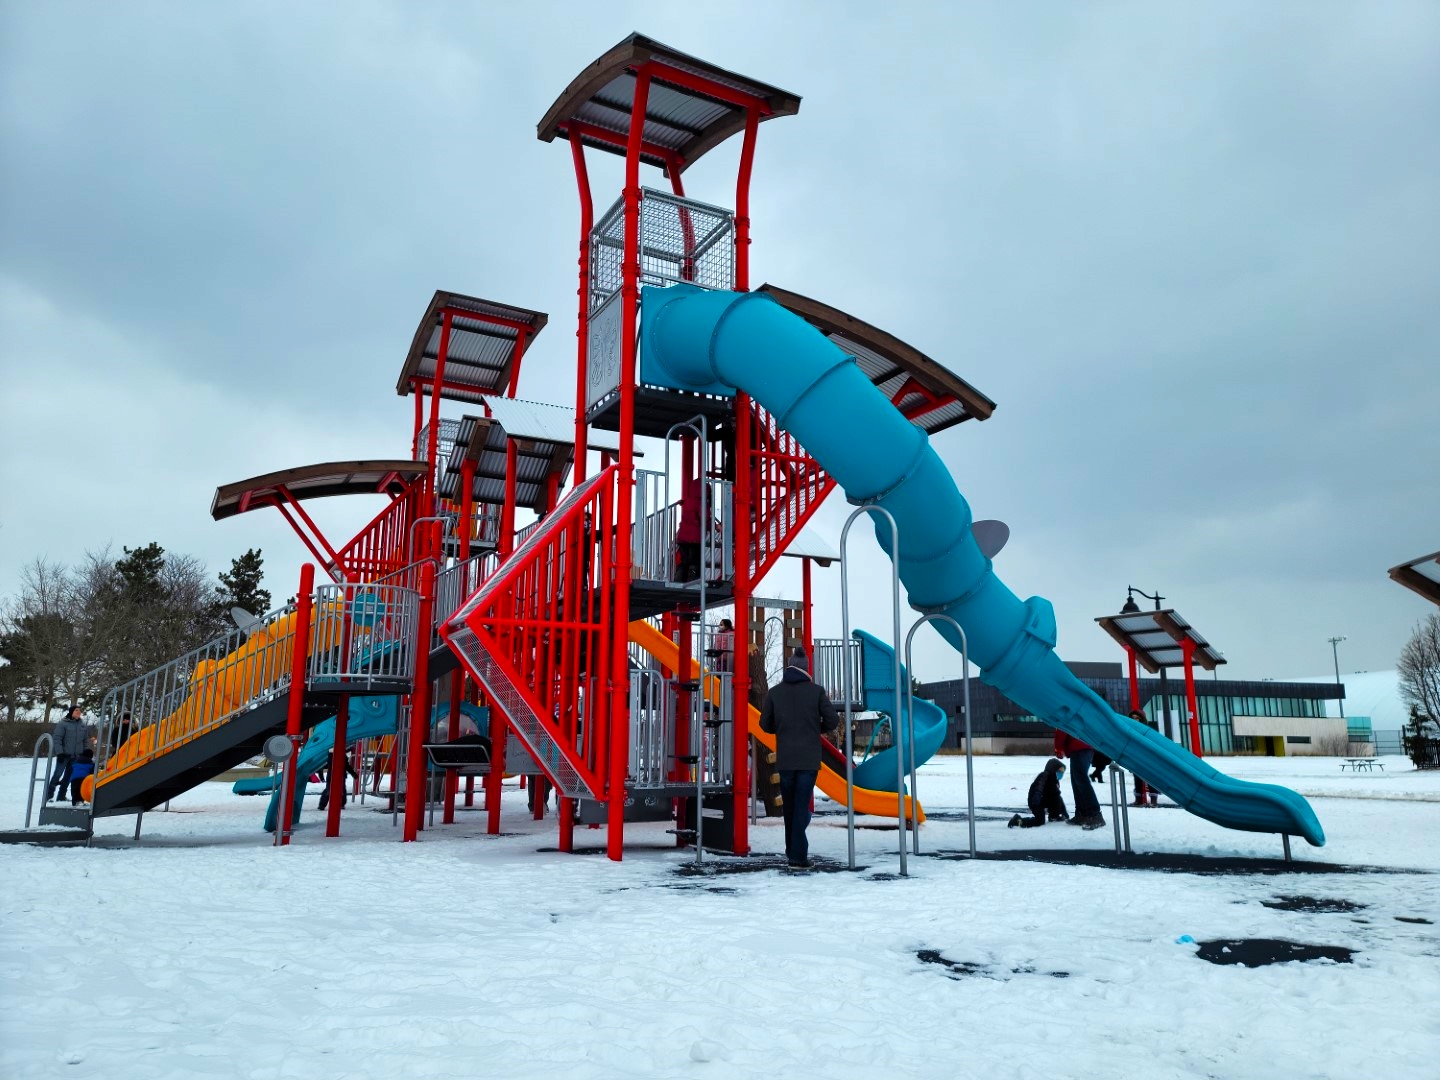 Ching Park Colourful playground in Brampton